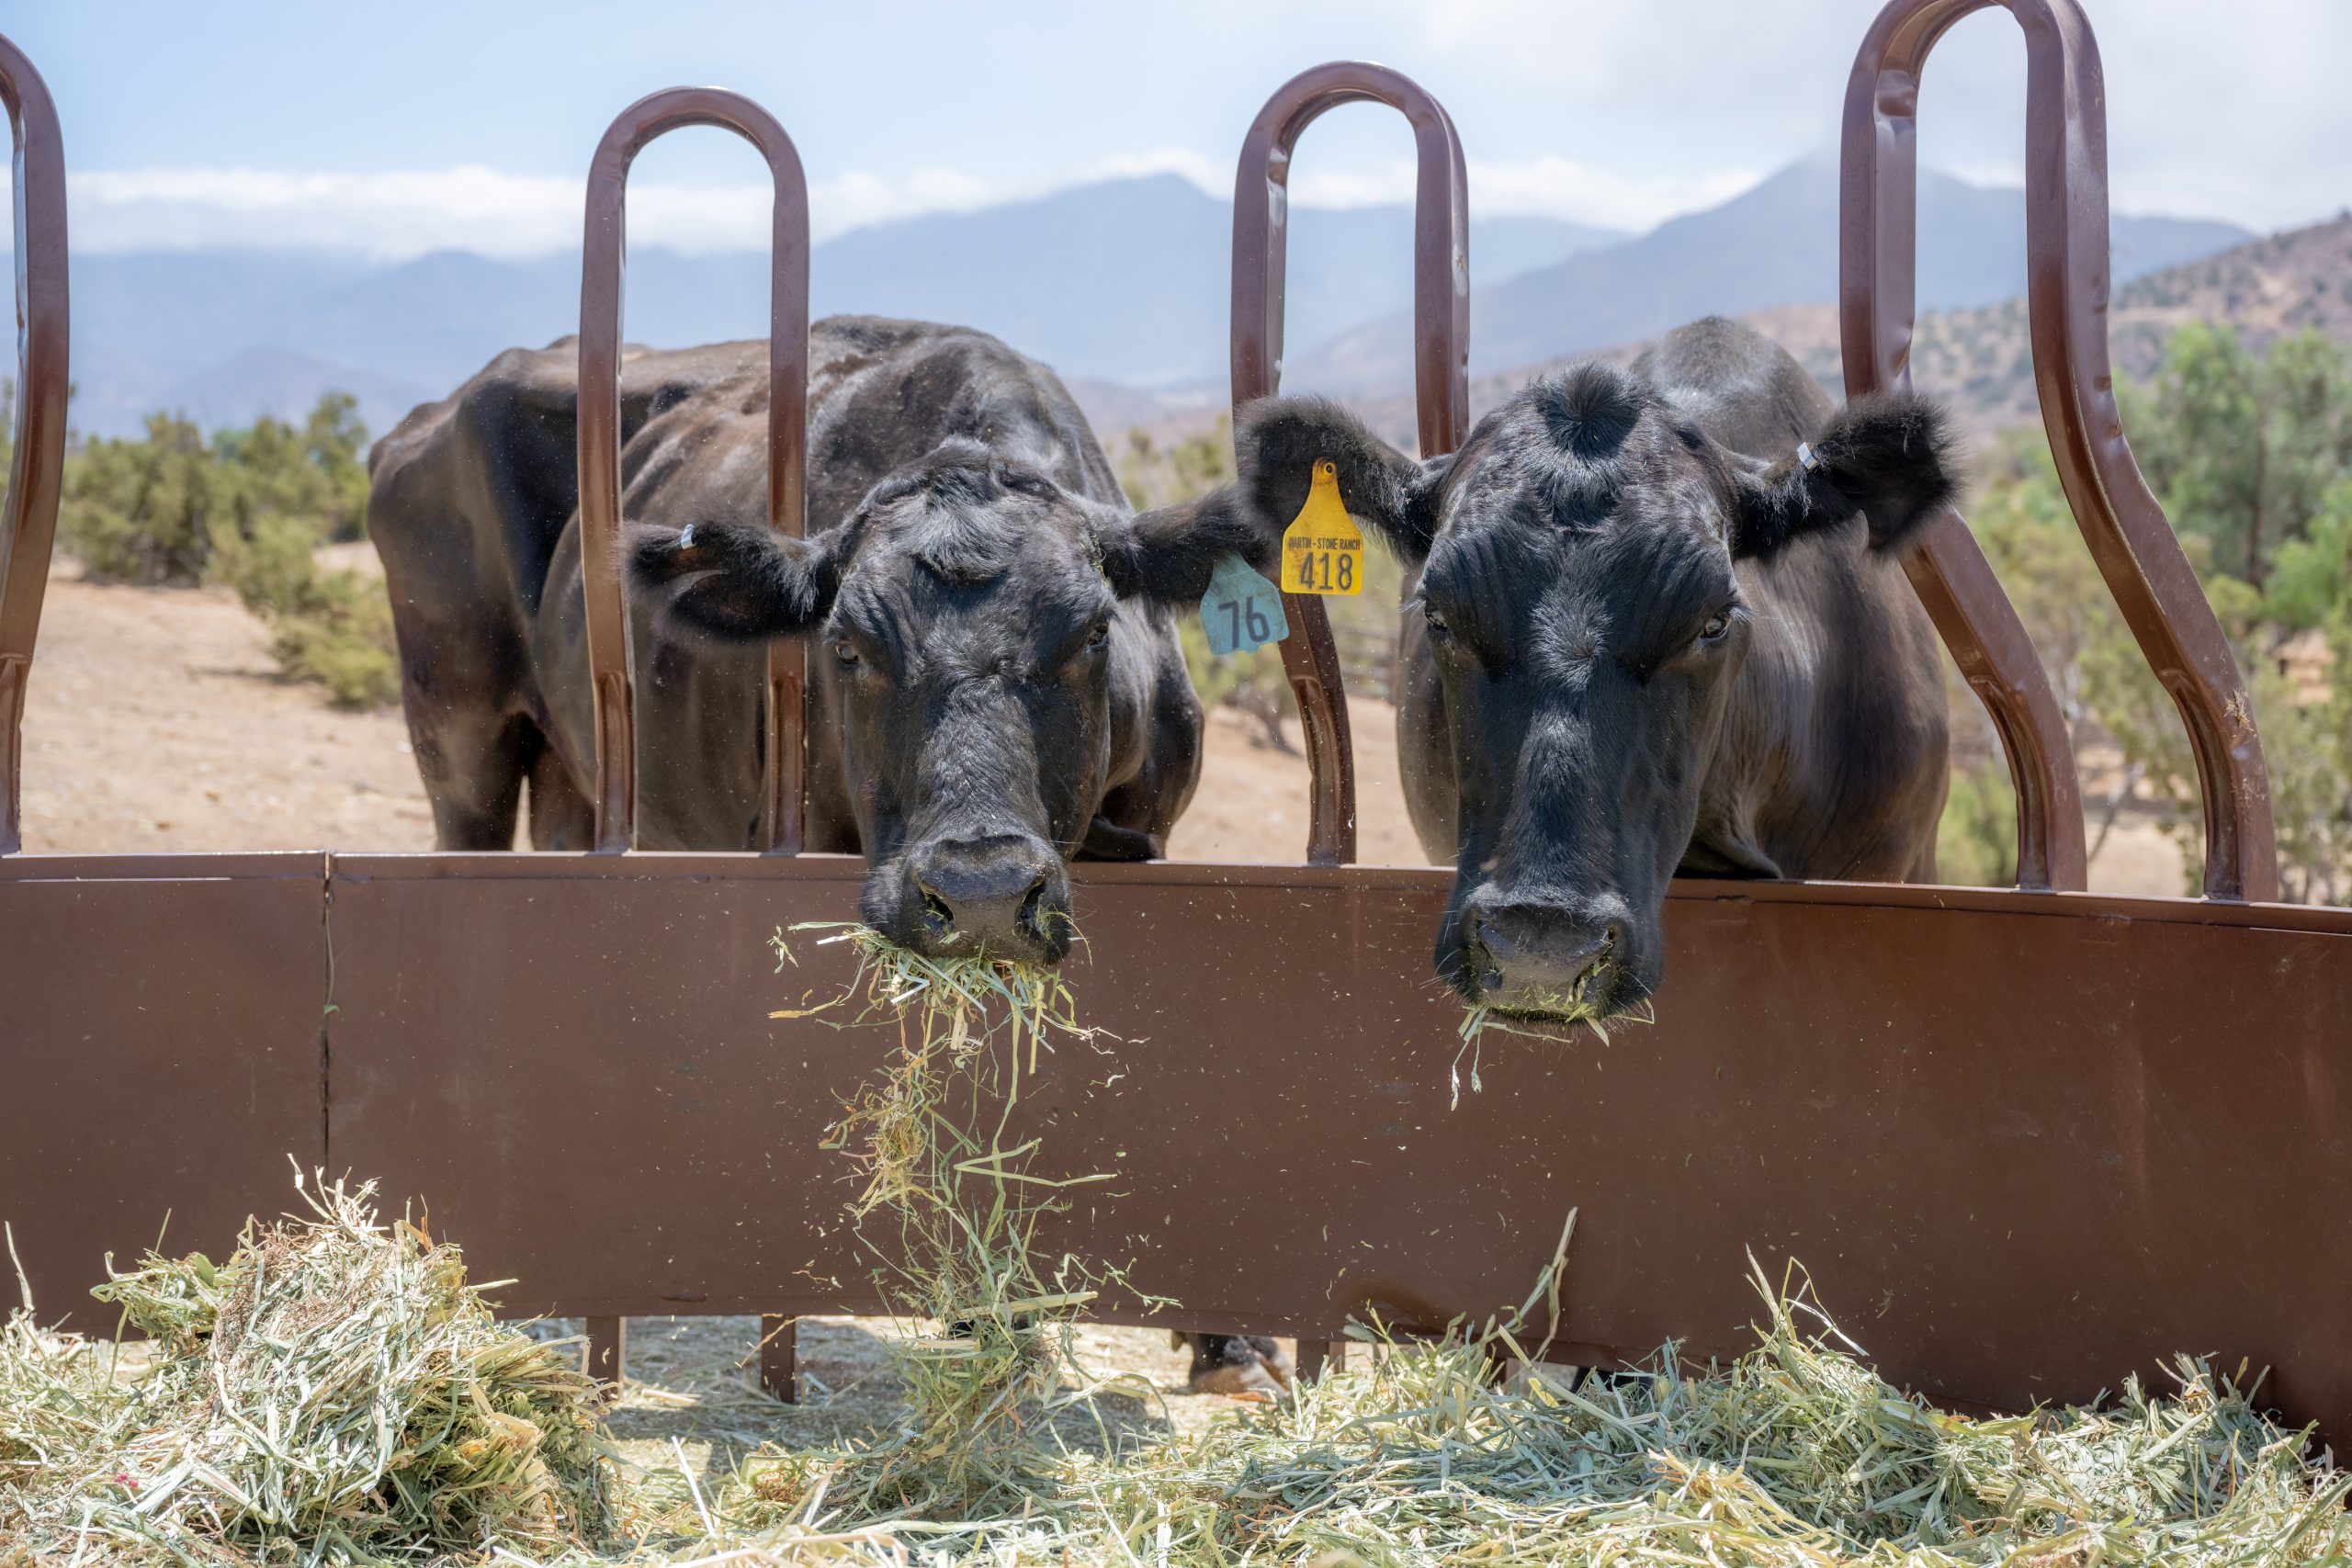 June B. Free and Susan cows eating hay at Sanctuary